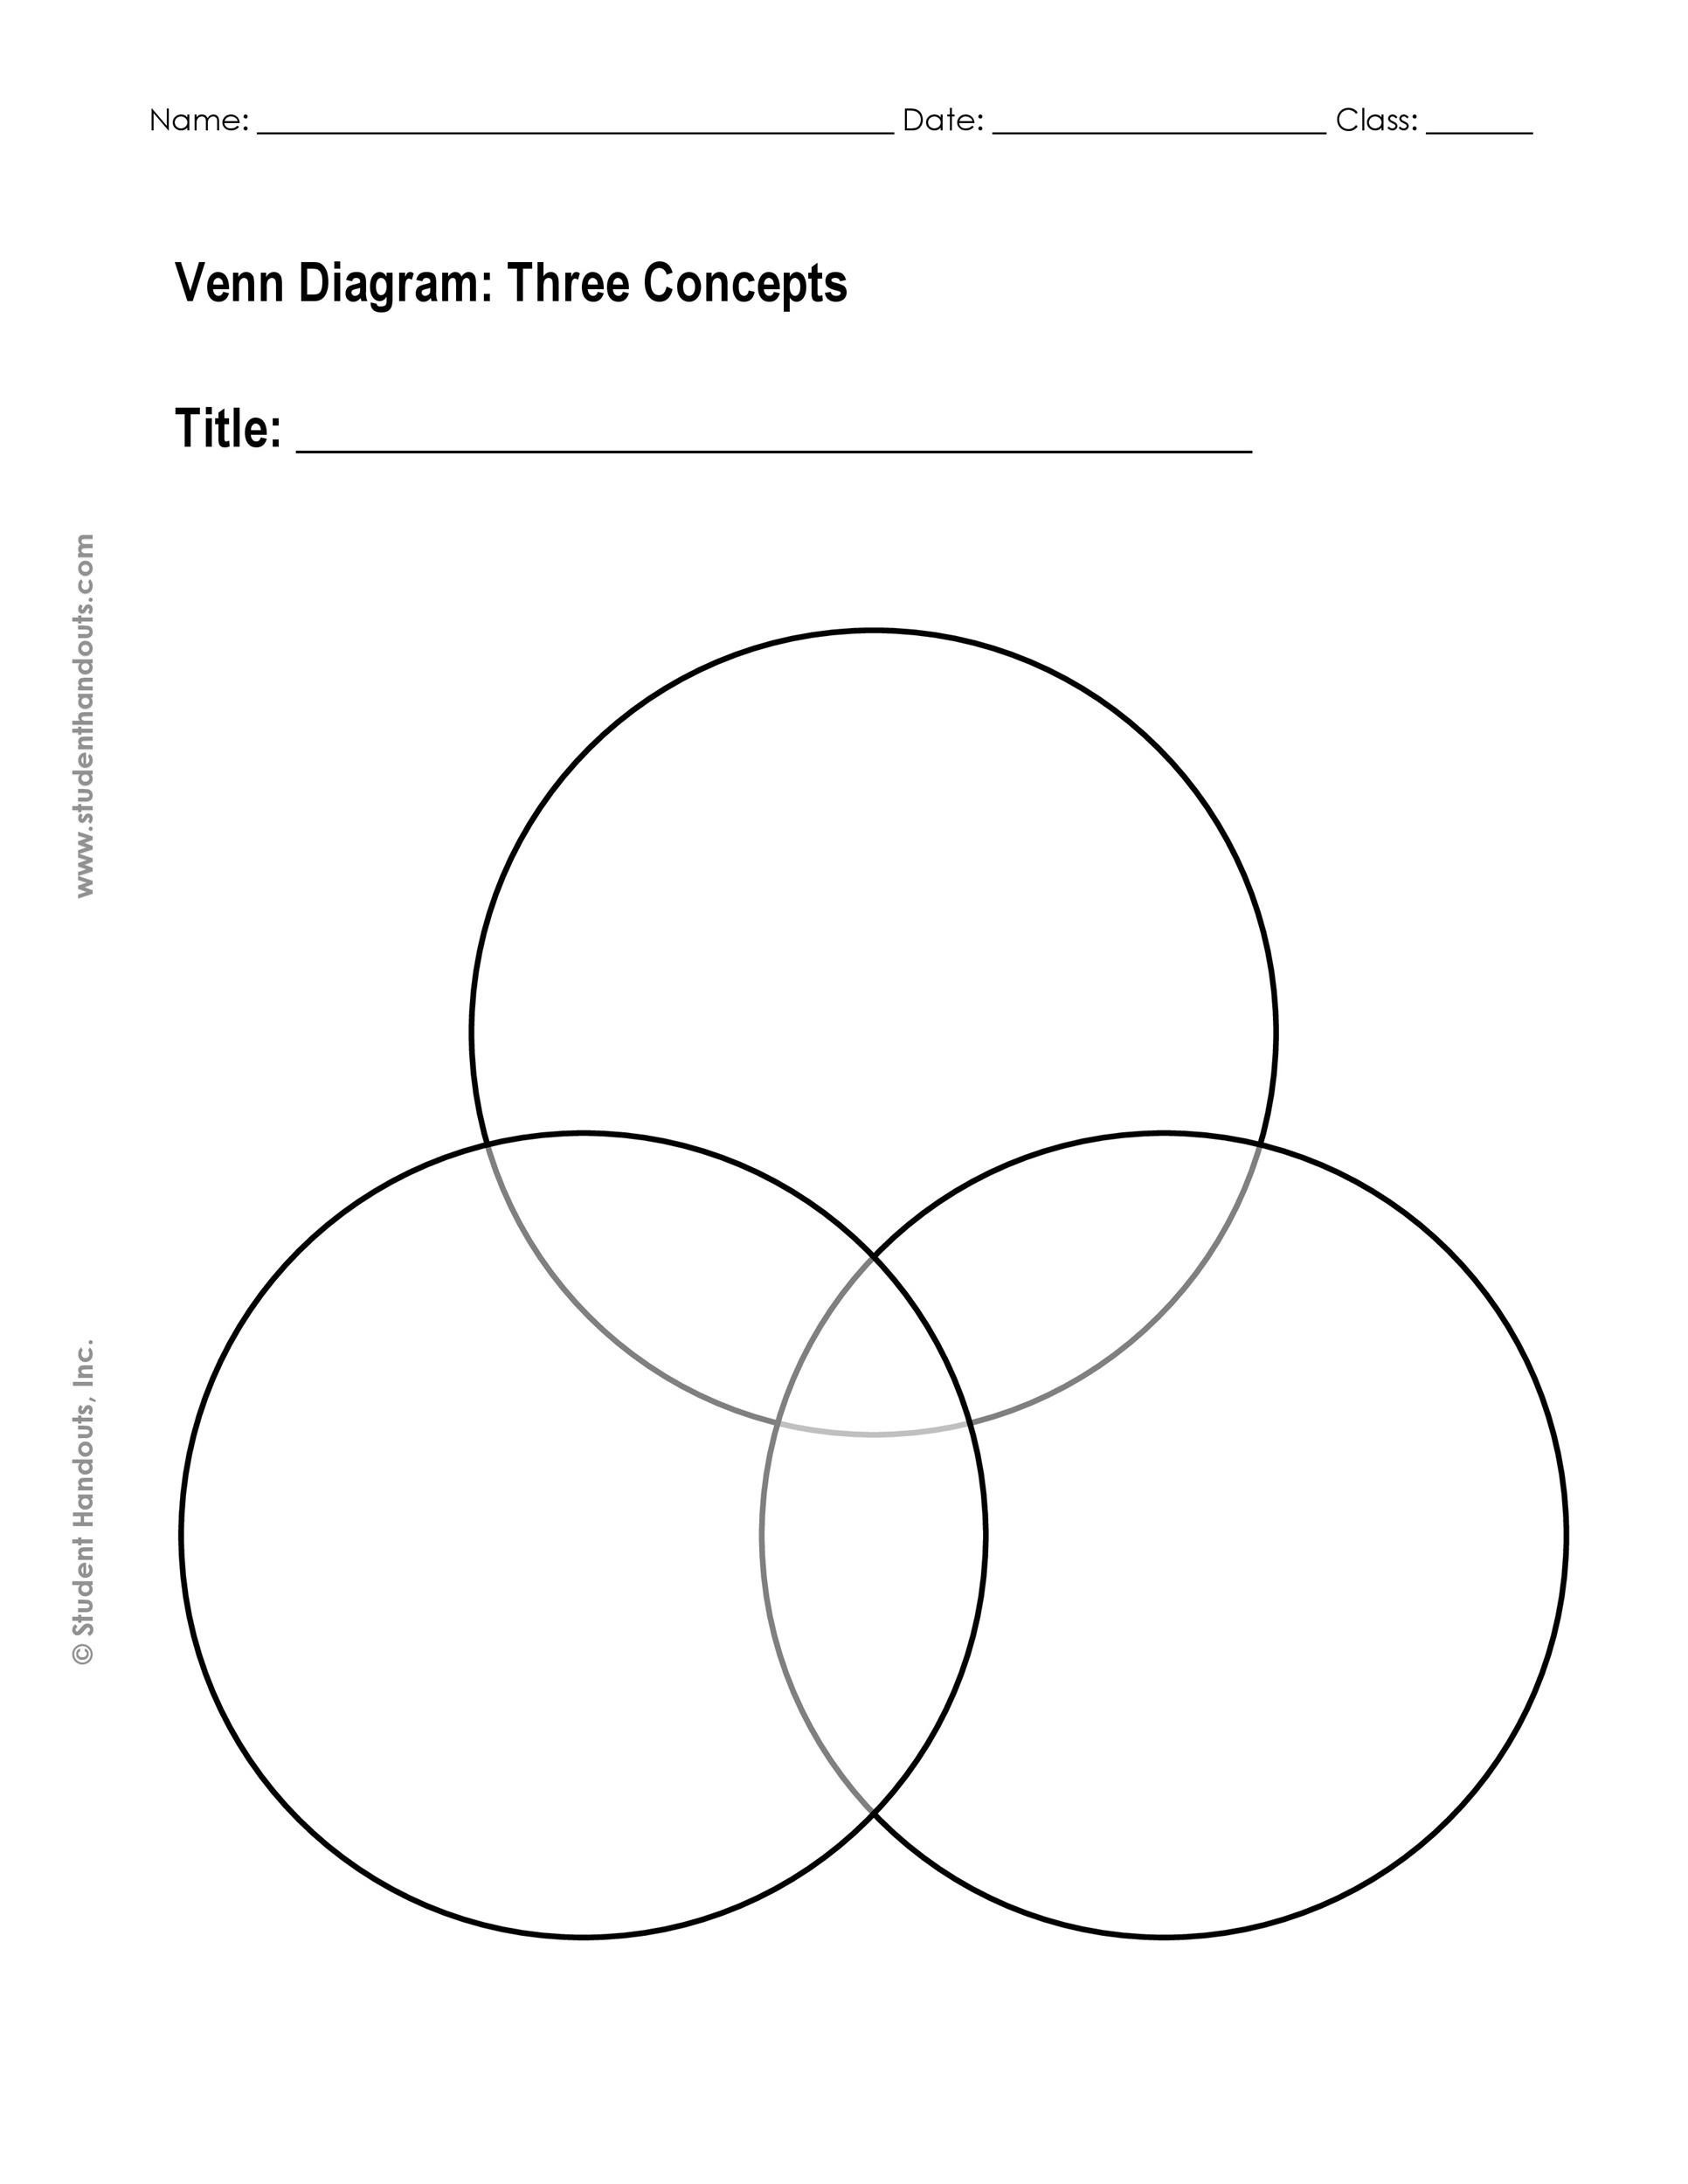 40+ Free Venn Diagram Templates (Word, PDF) ᐅ TemplateLab